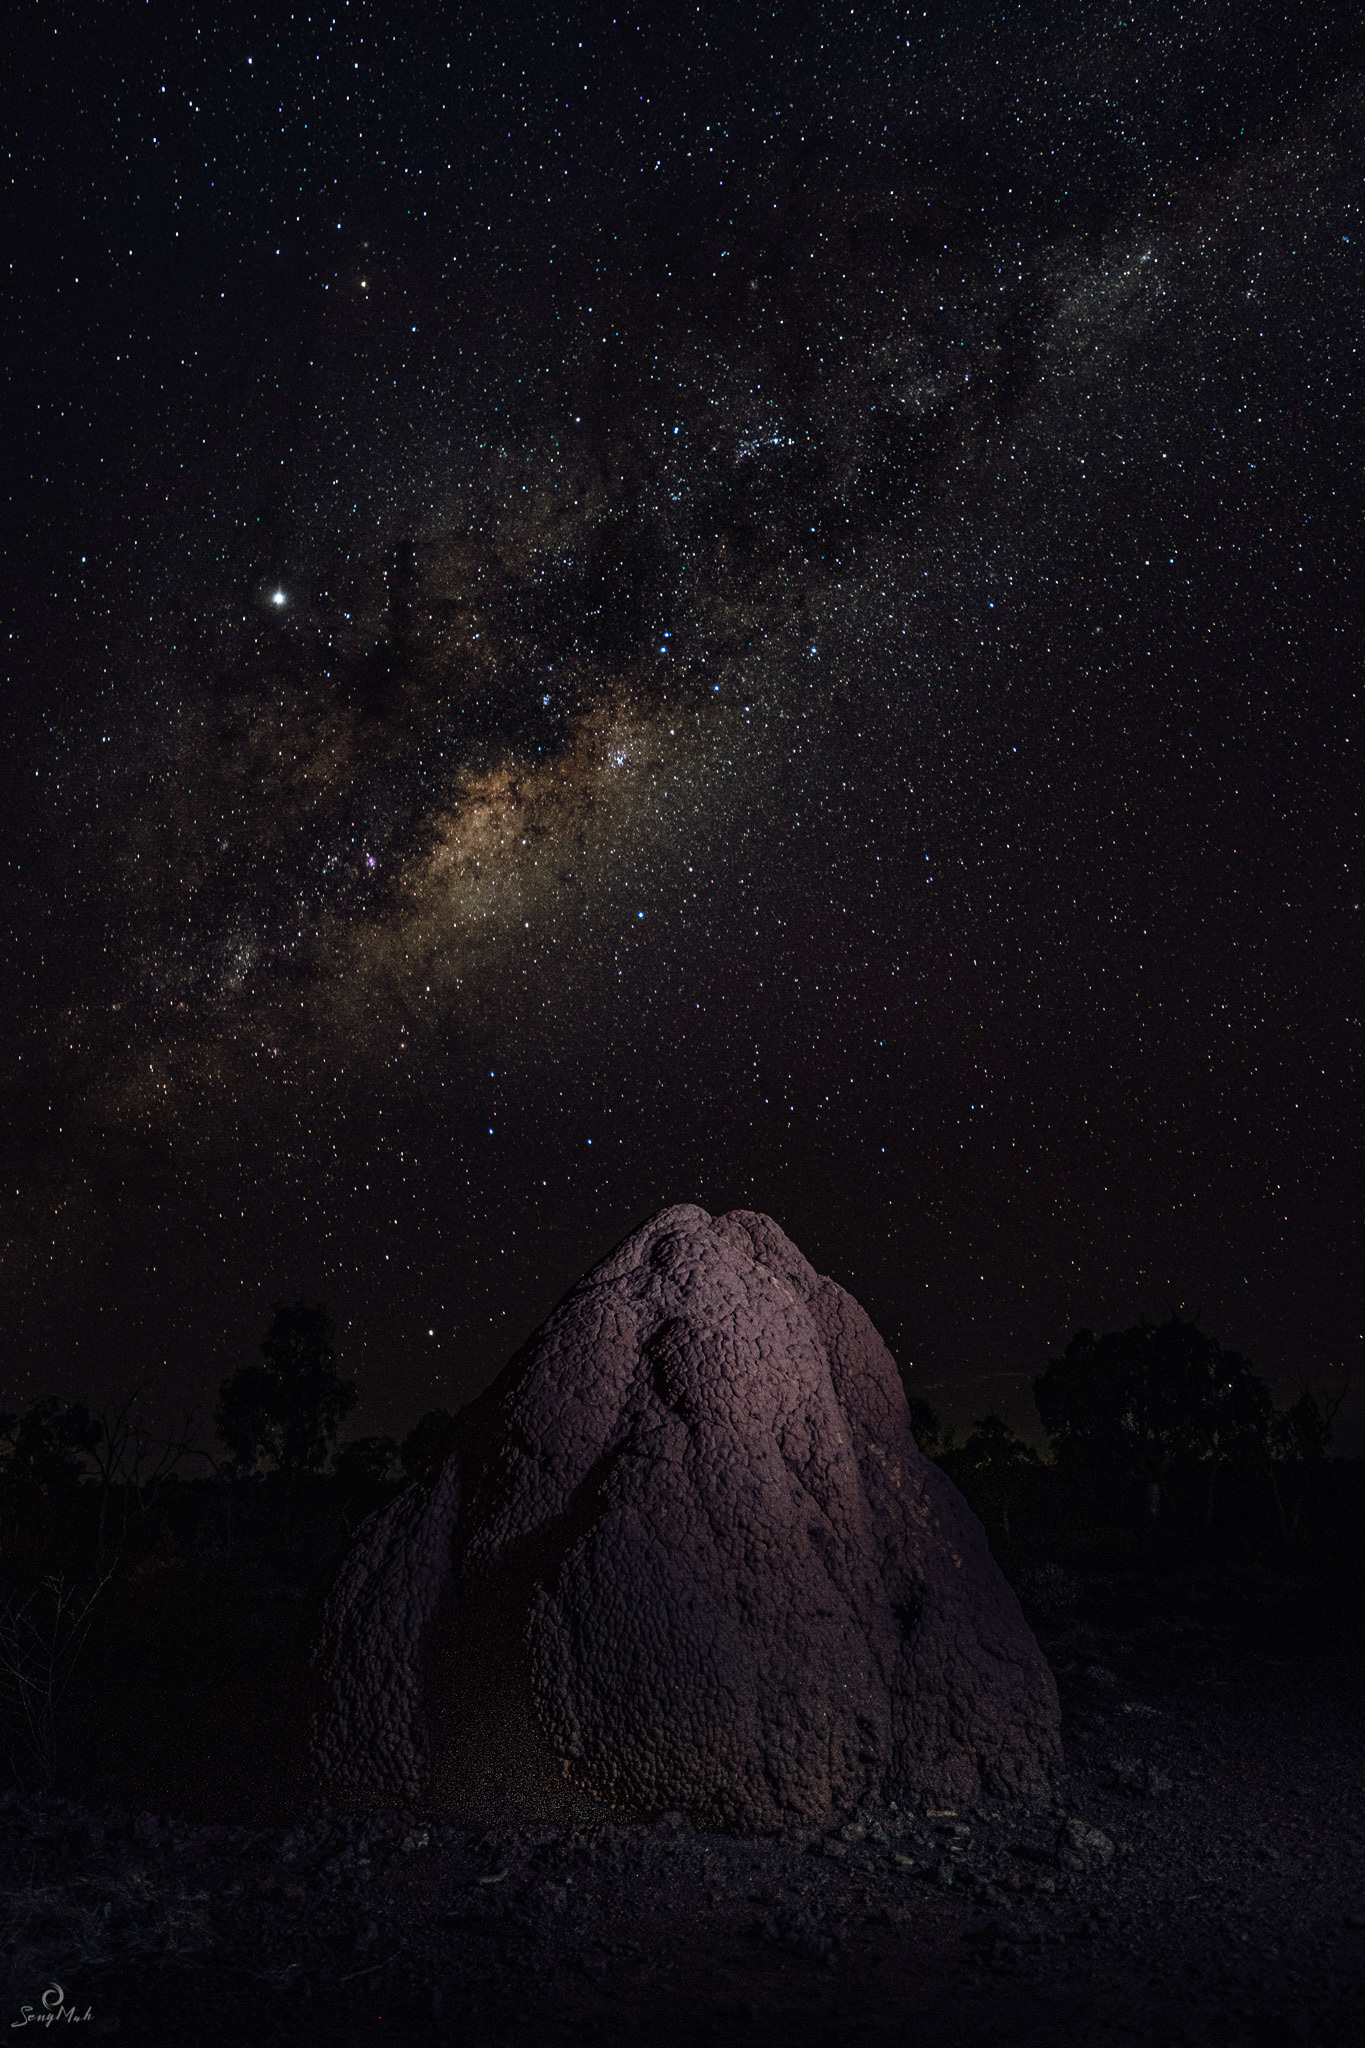 Milky way above termite mound